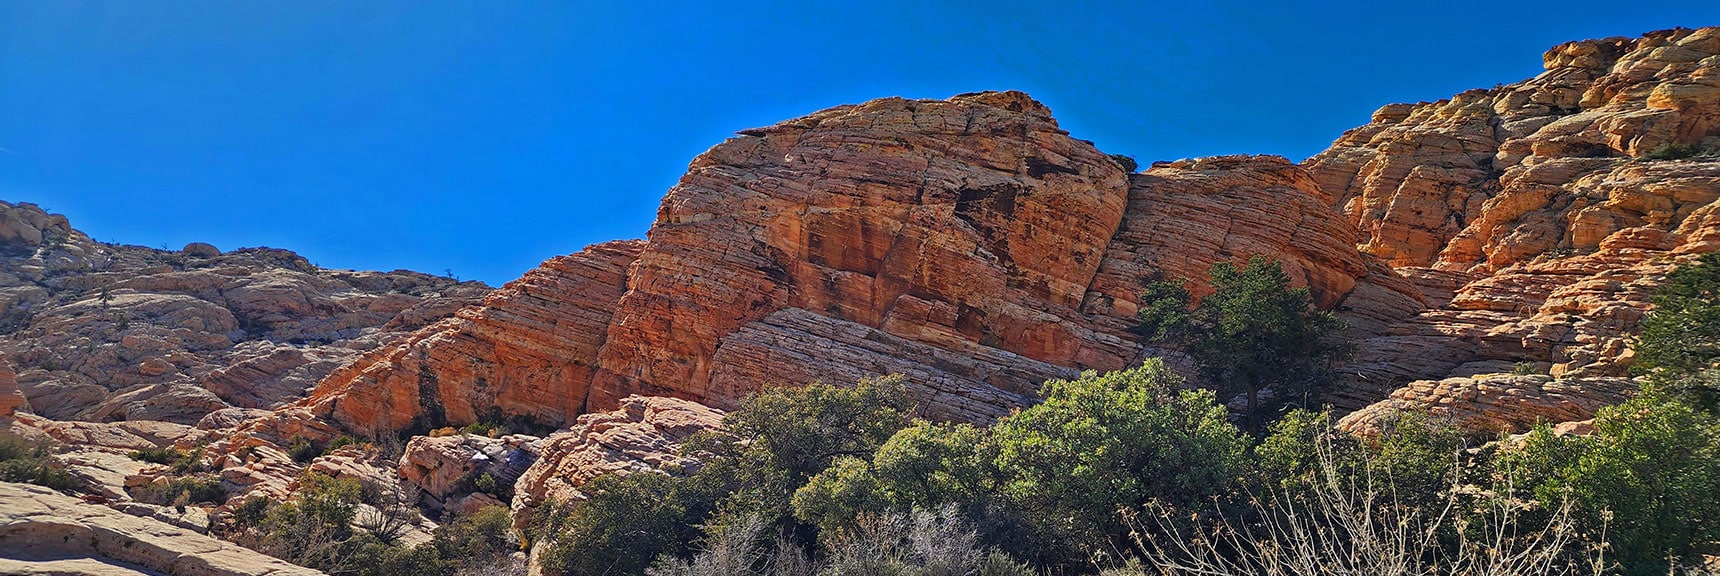 Just Beyond Upper Gray Cap Ridge Are the Petroglyph Cliffs. | Brownstone Trail | Calico Basin | Brownstone Basin | La Madre Mountains Wilderness, Nevada